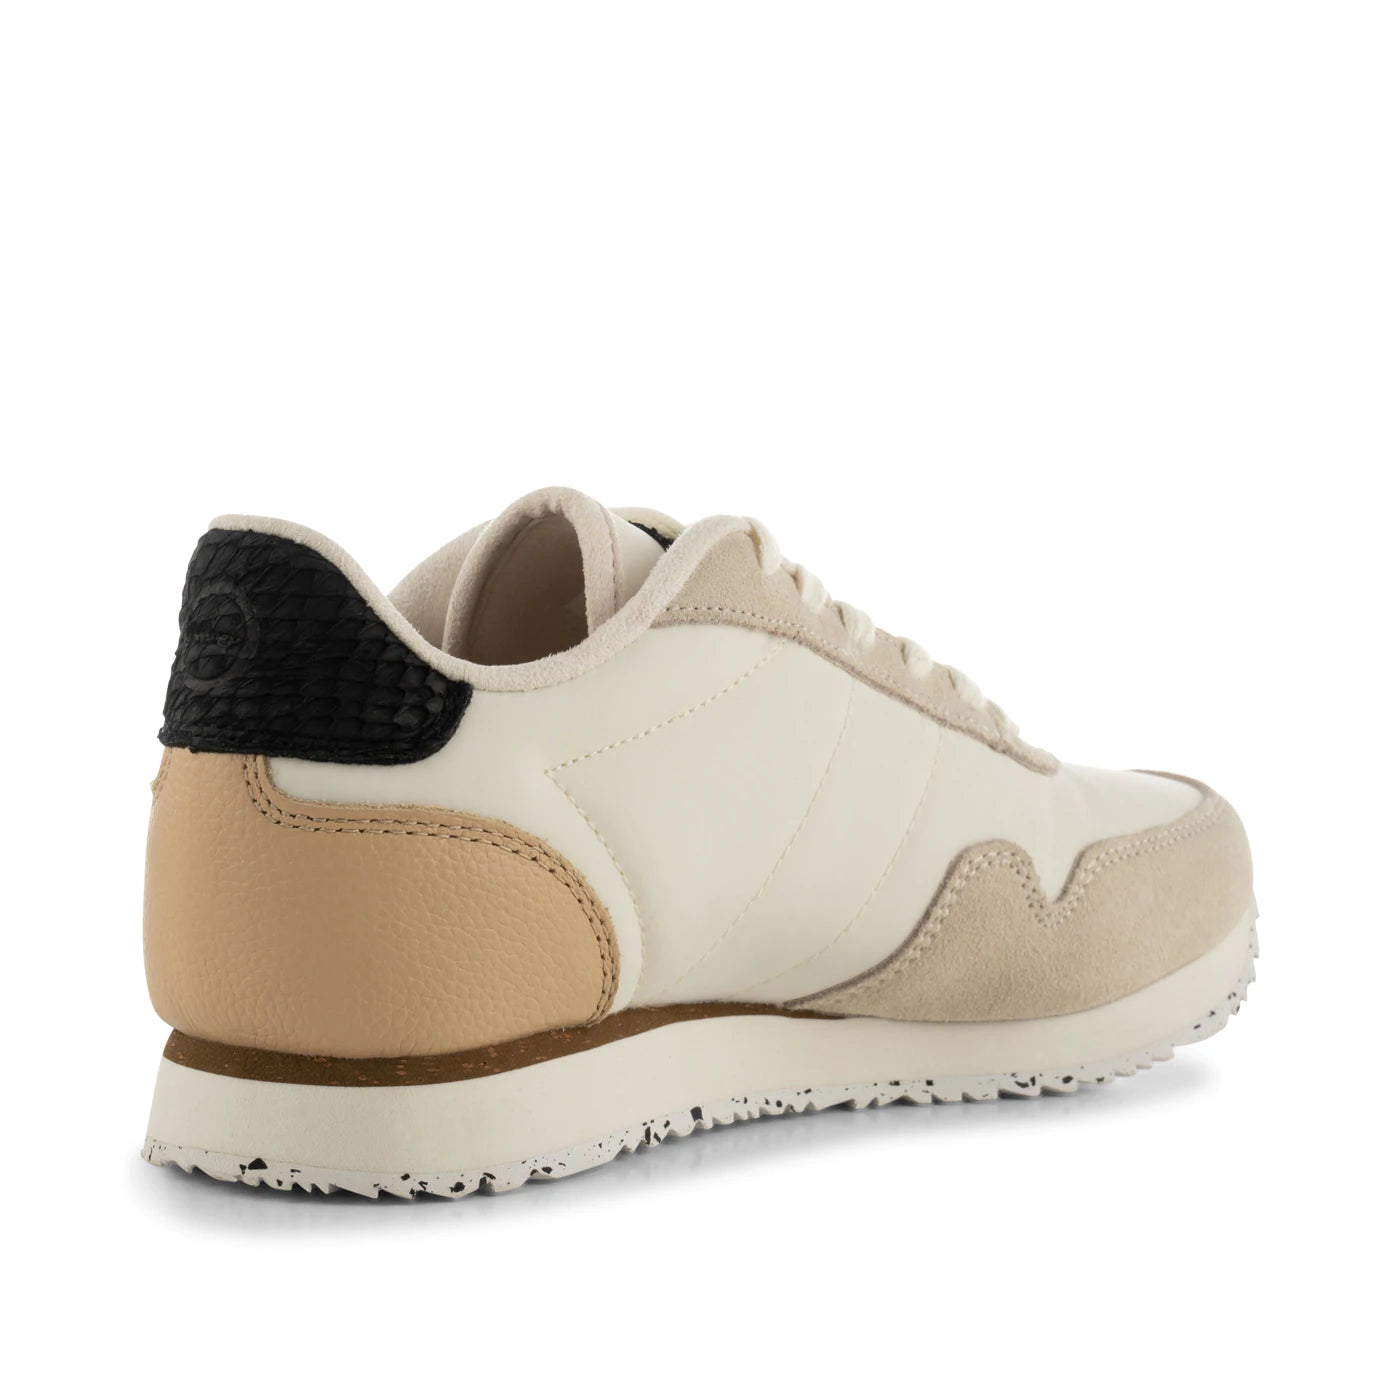 Nora III Leather - Whisper White - Sneakers